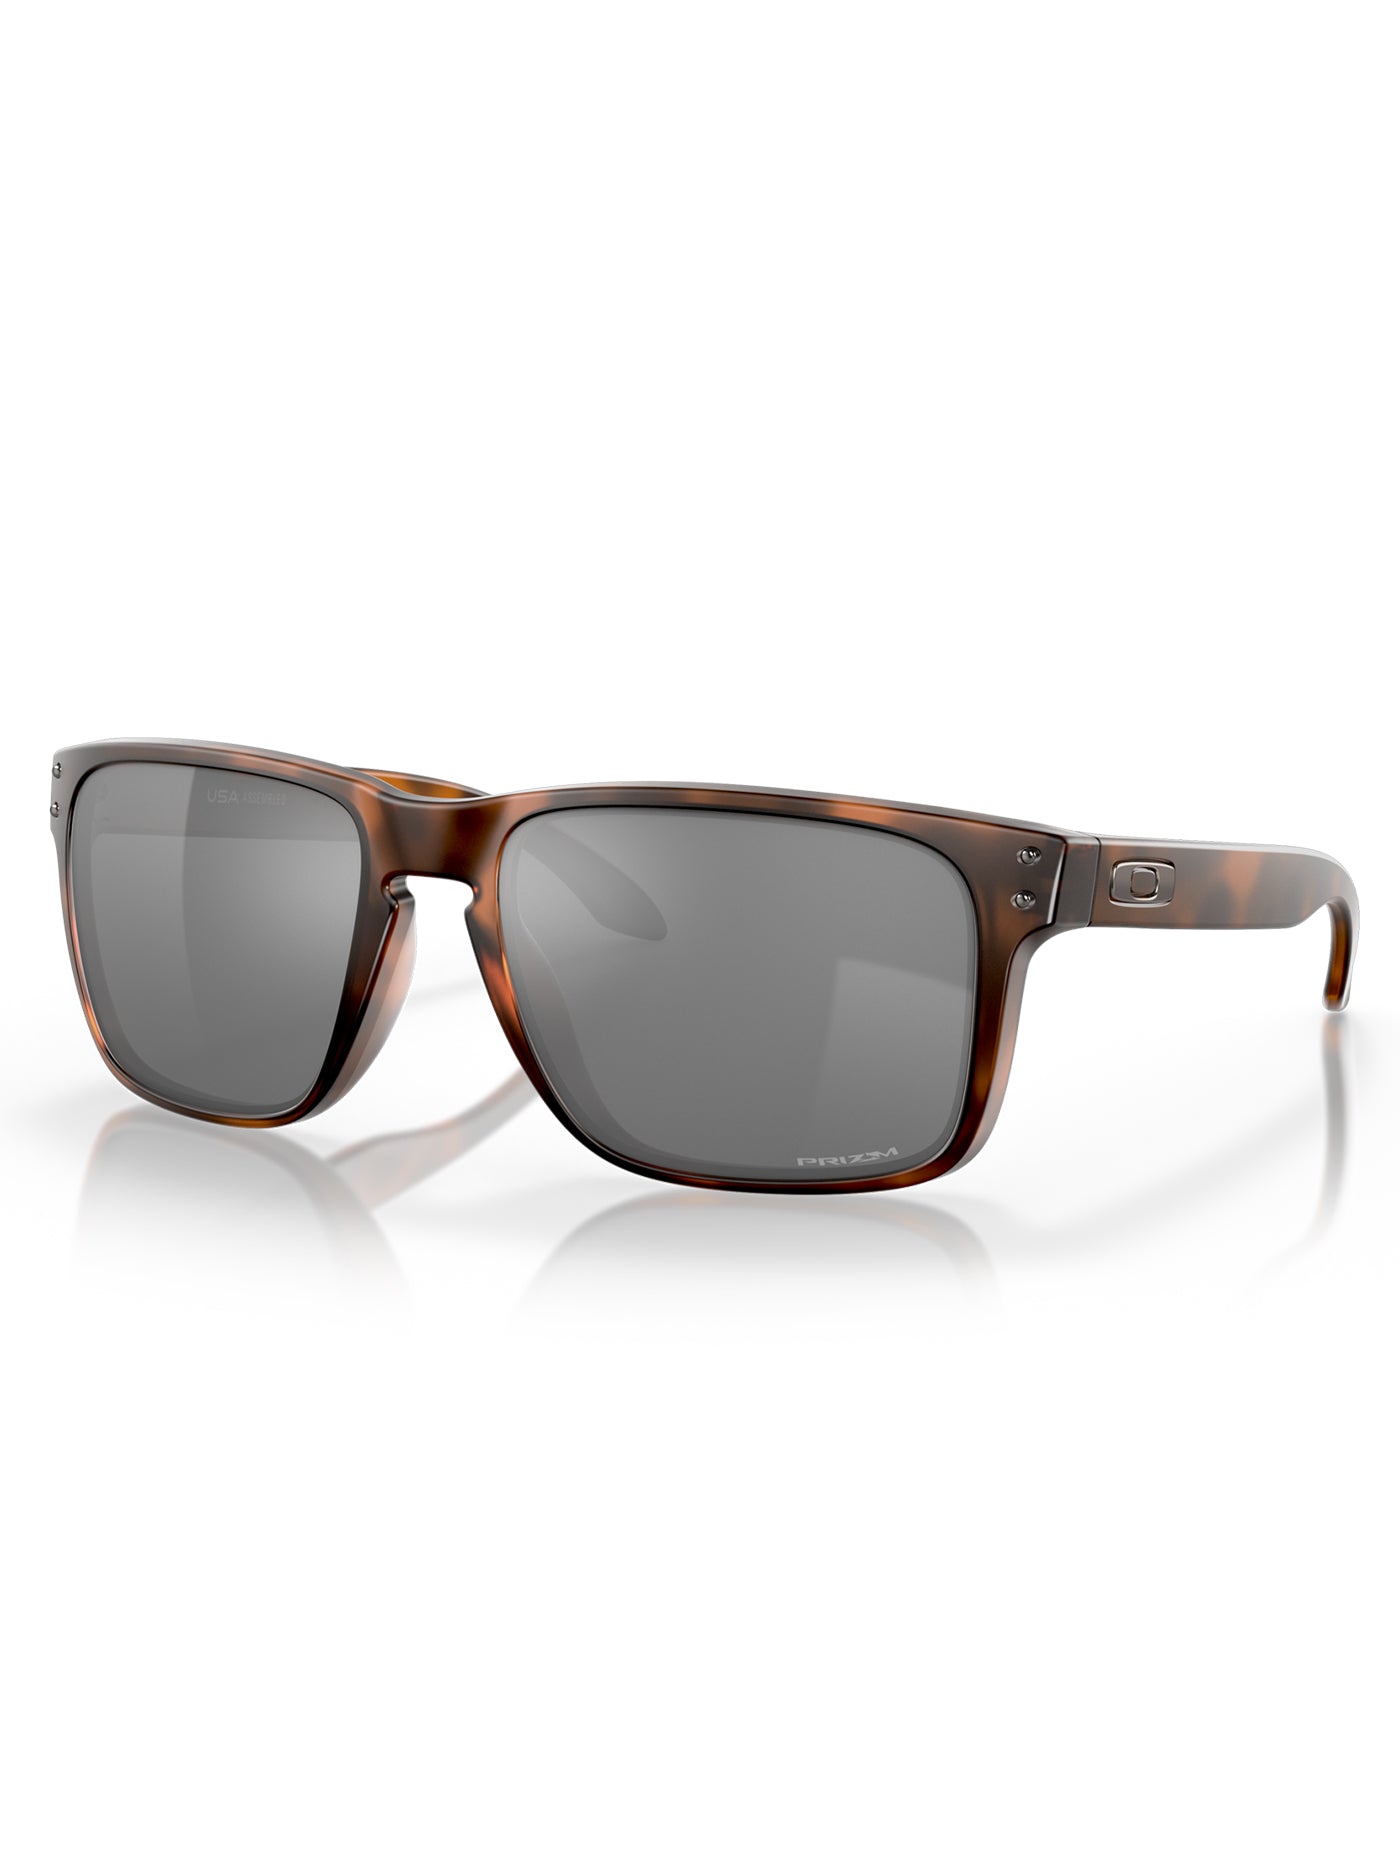 Oakley Holbrook XL Brown Tortoise/Prizm Black Sunglasses